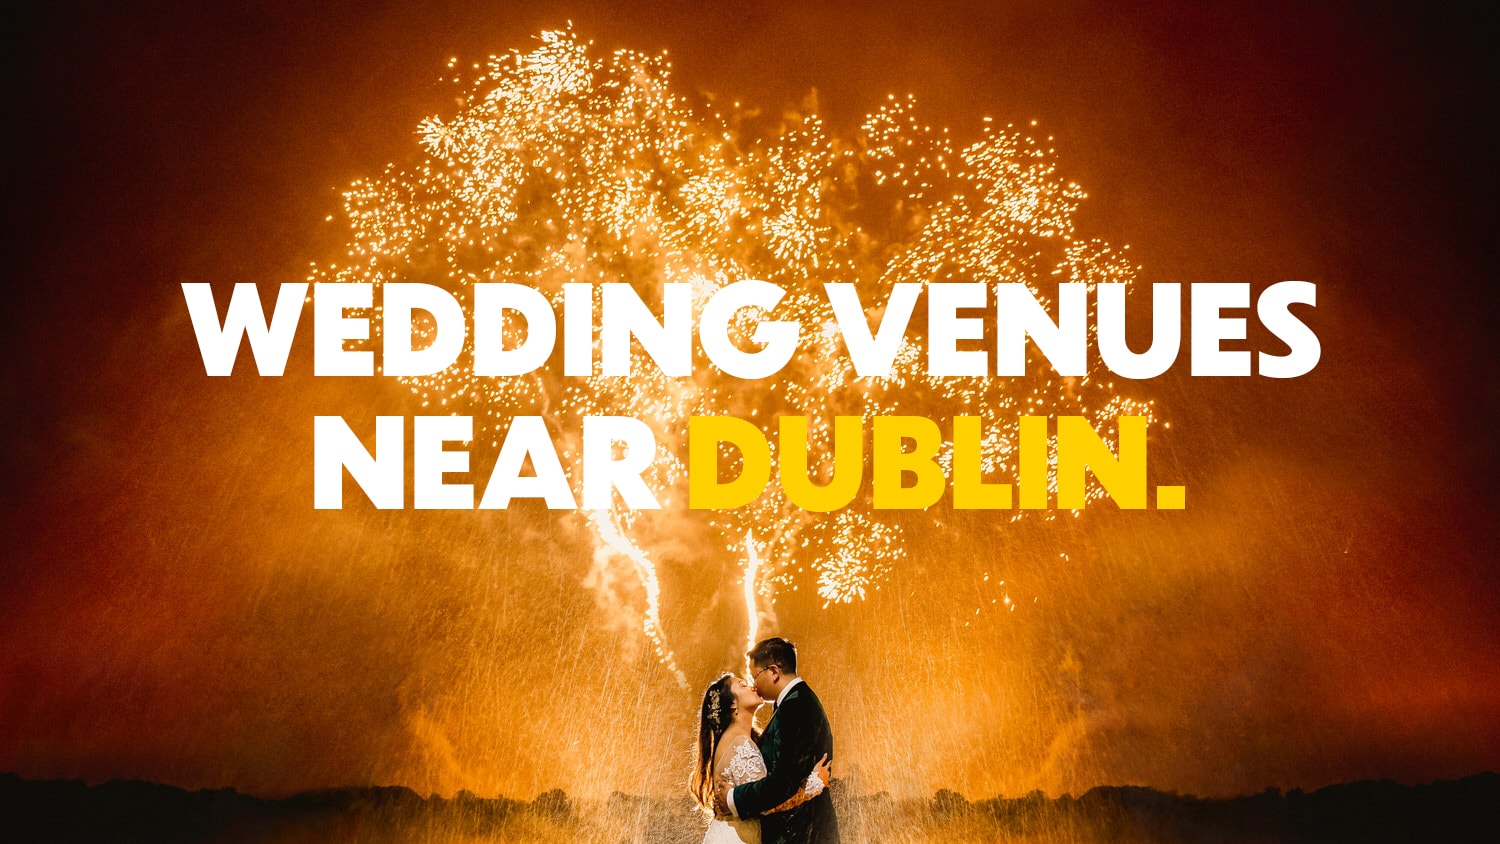 Best Wedding Venues near Dublin - updated for 2021